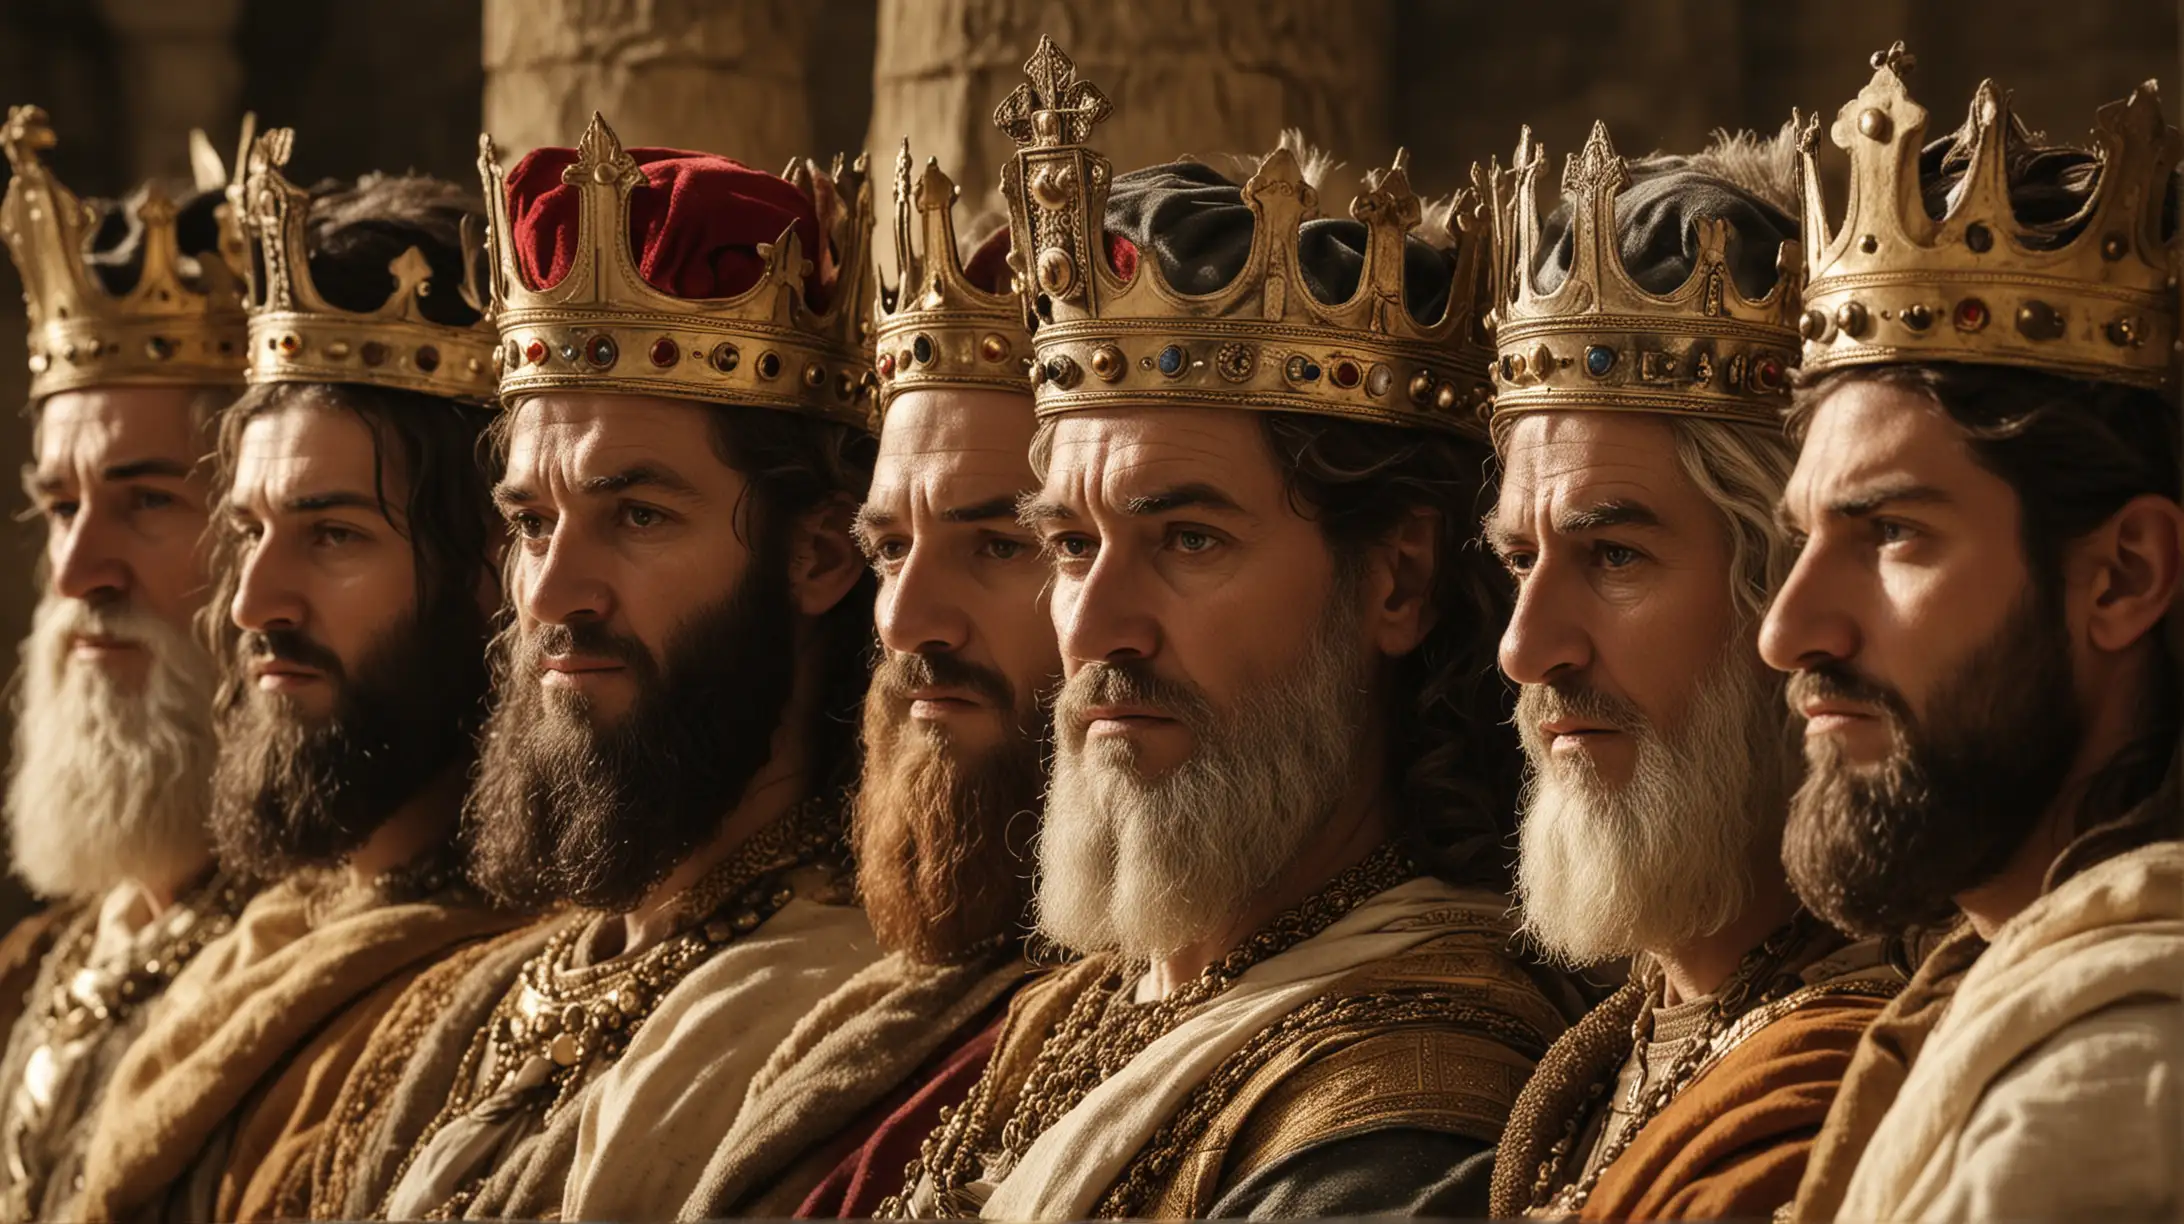 CloseUp Portraits of Kings from the Biblical Era of King David